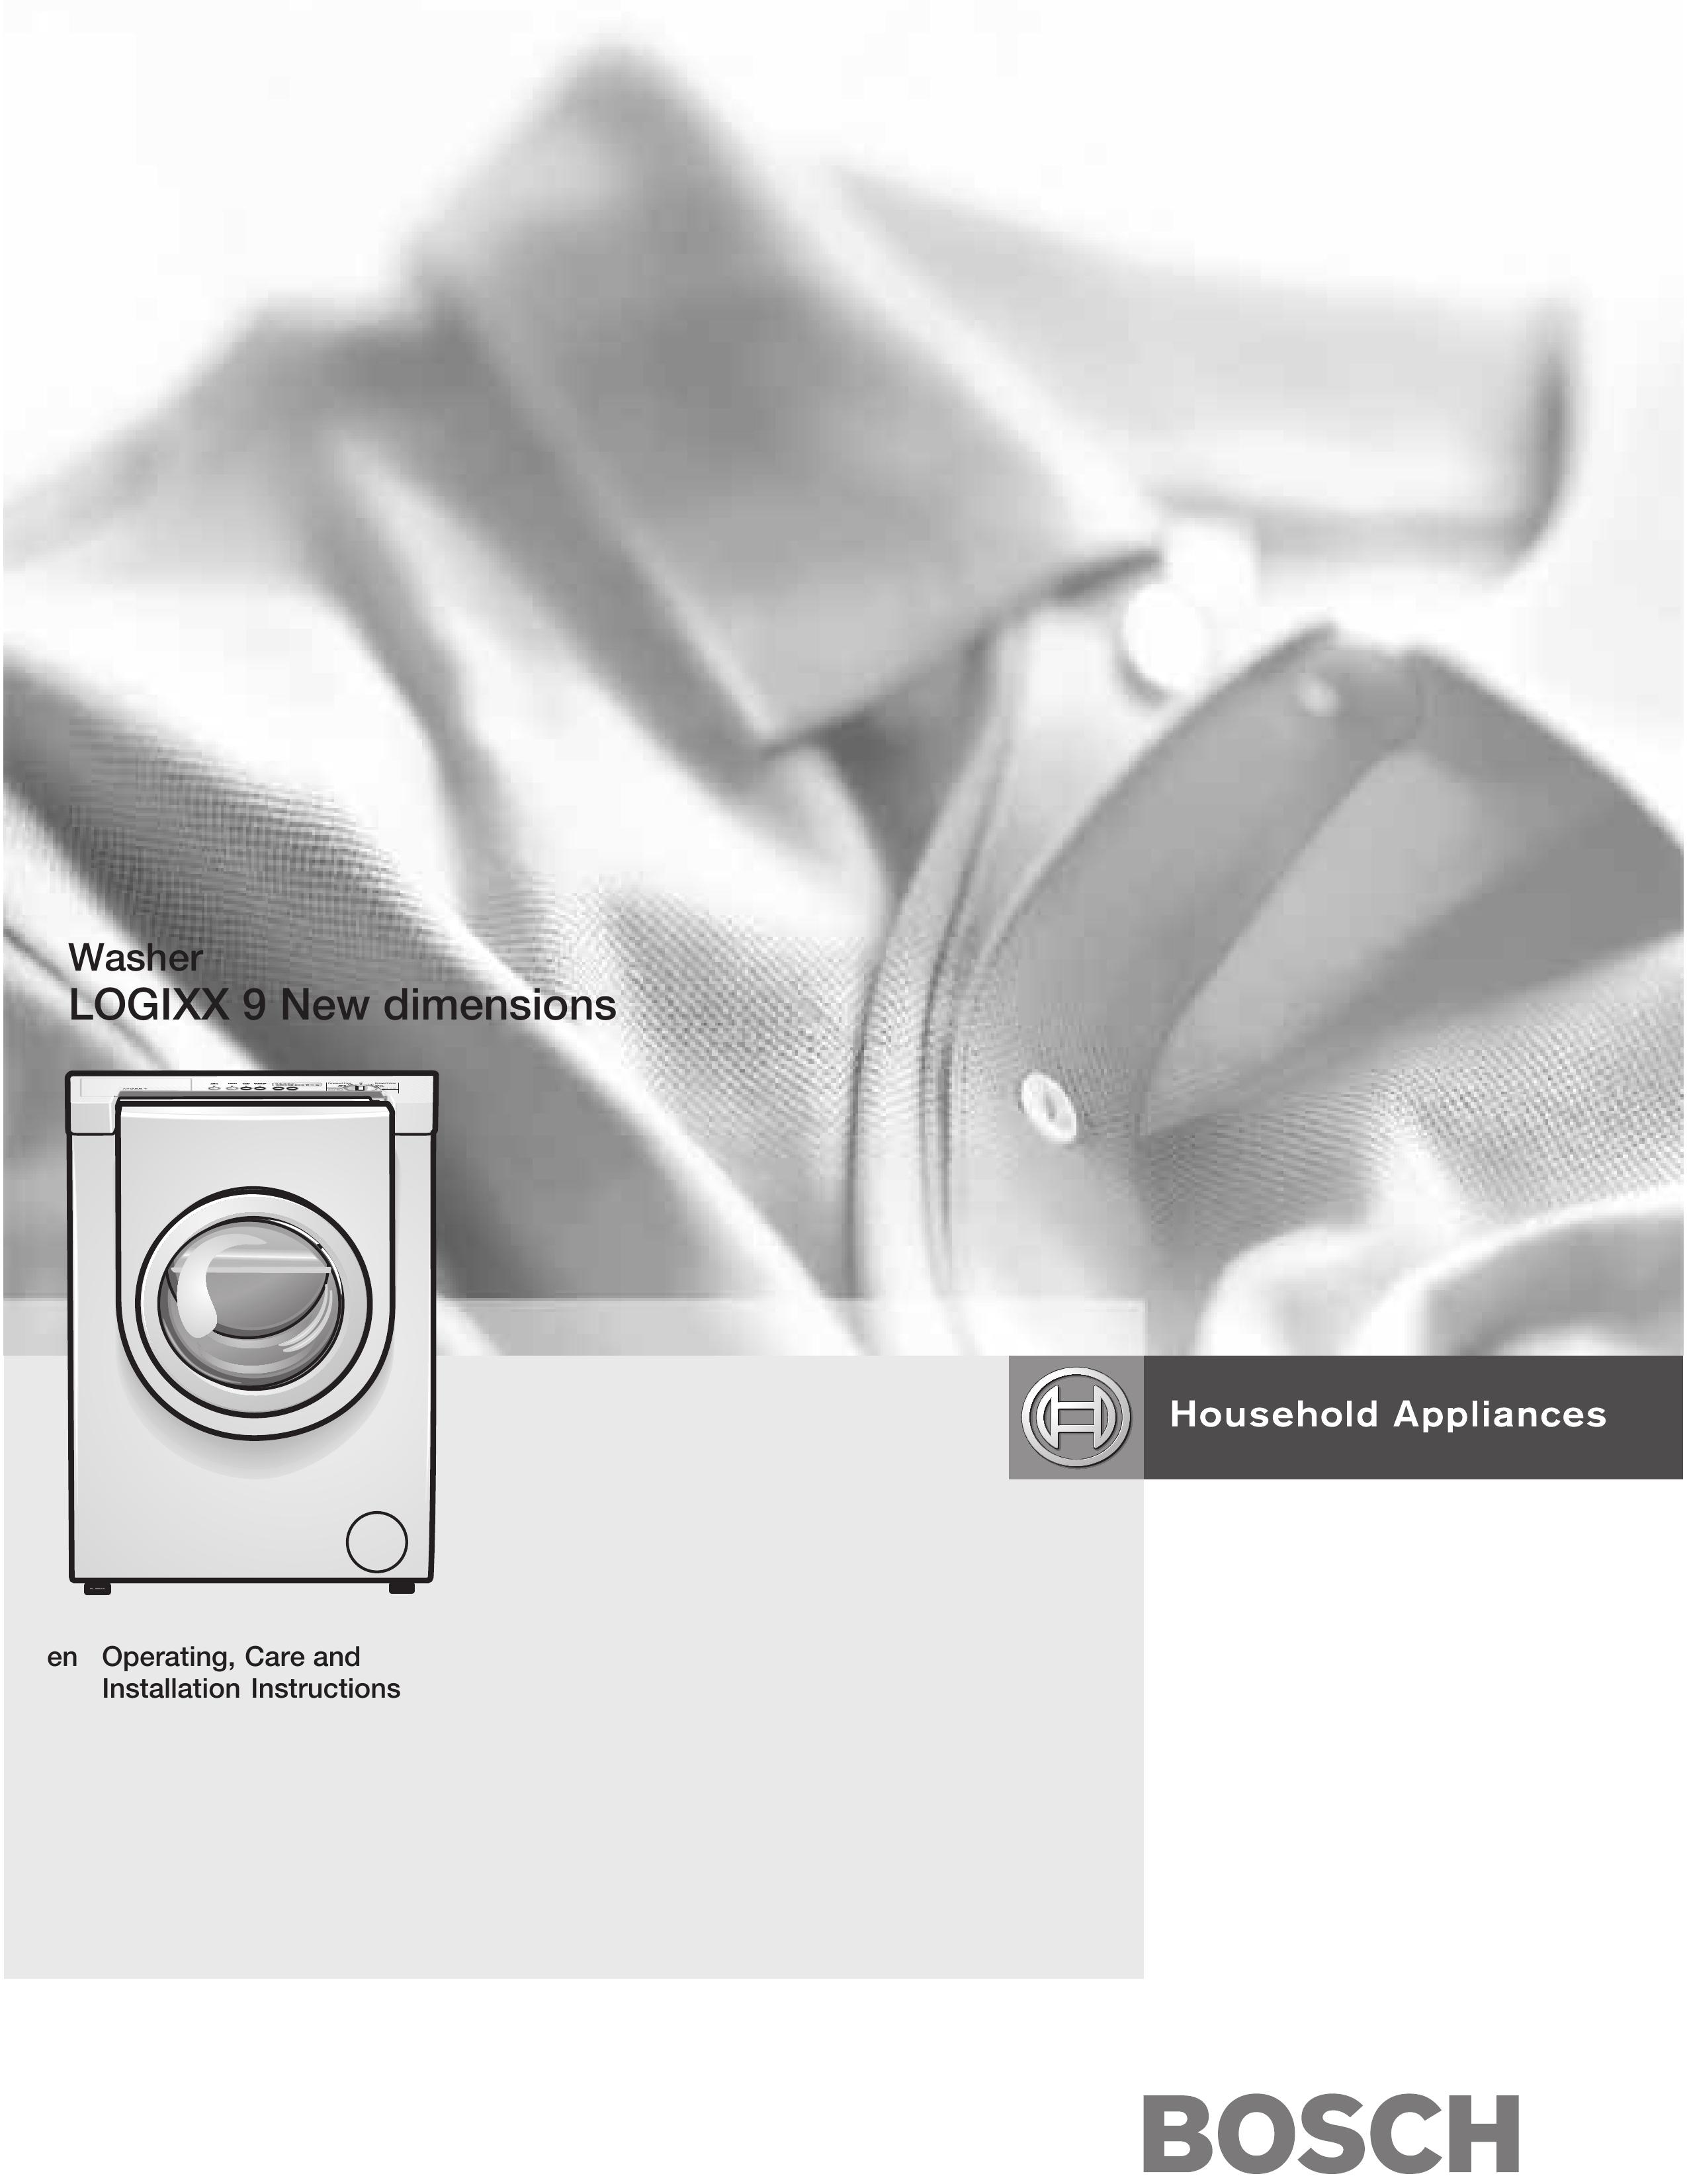 Bosch Appliances LOGIXX 9 Washer User Manual